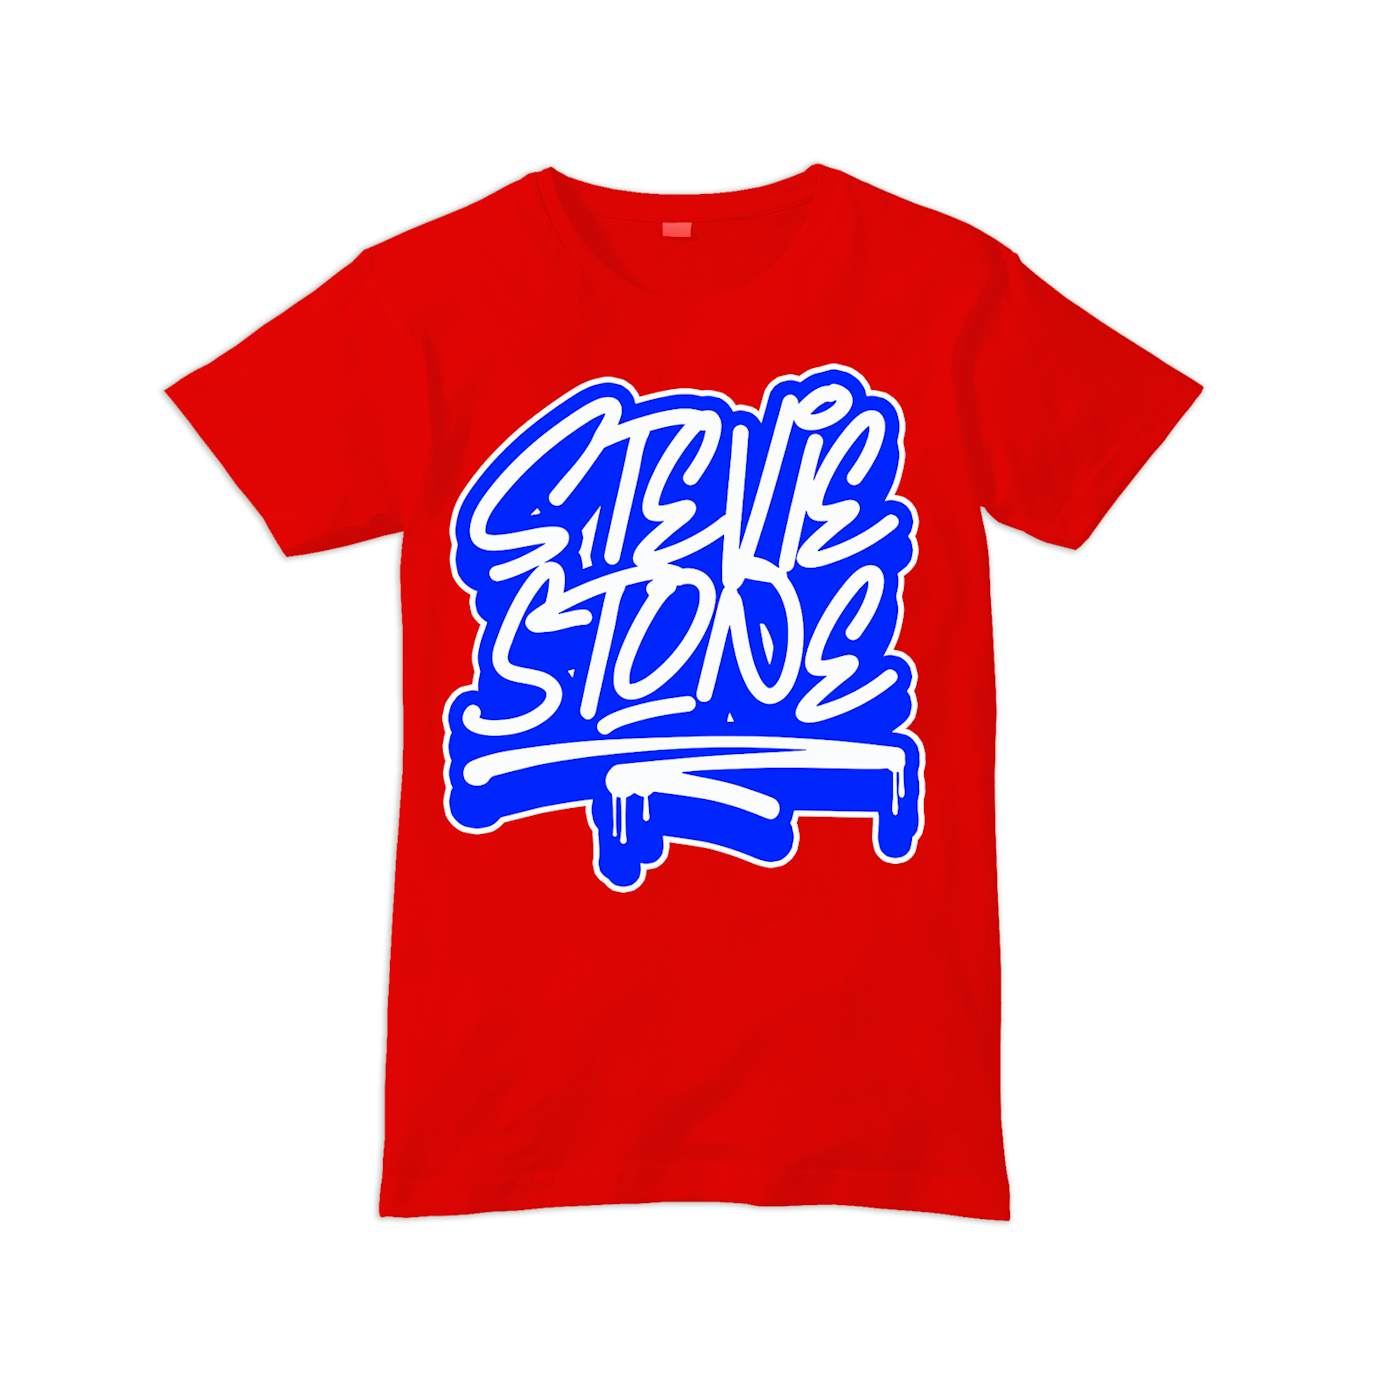 Stevie Stone Graffiti Red Shirt